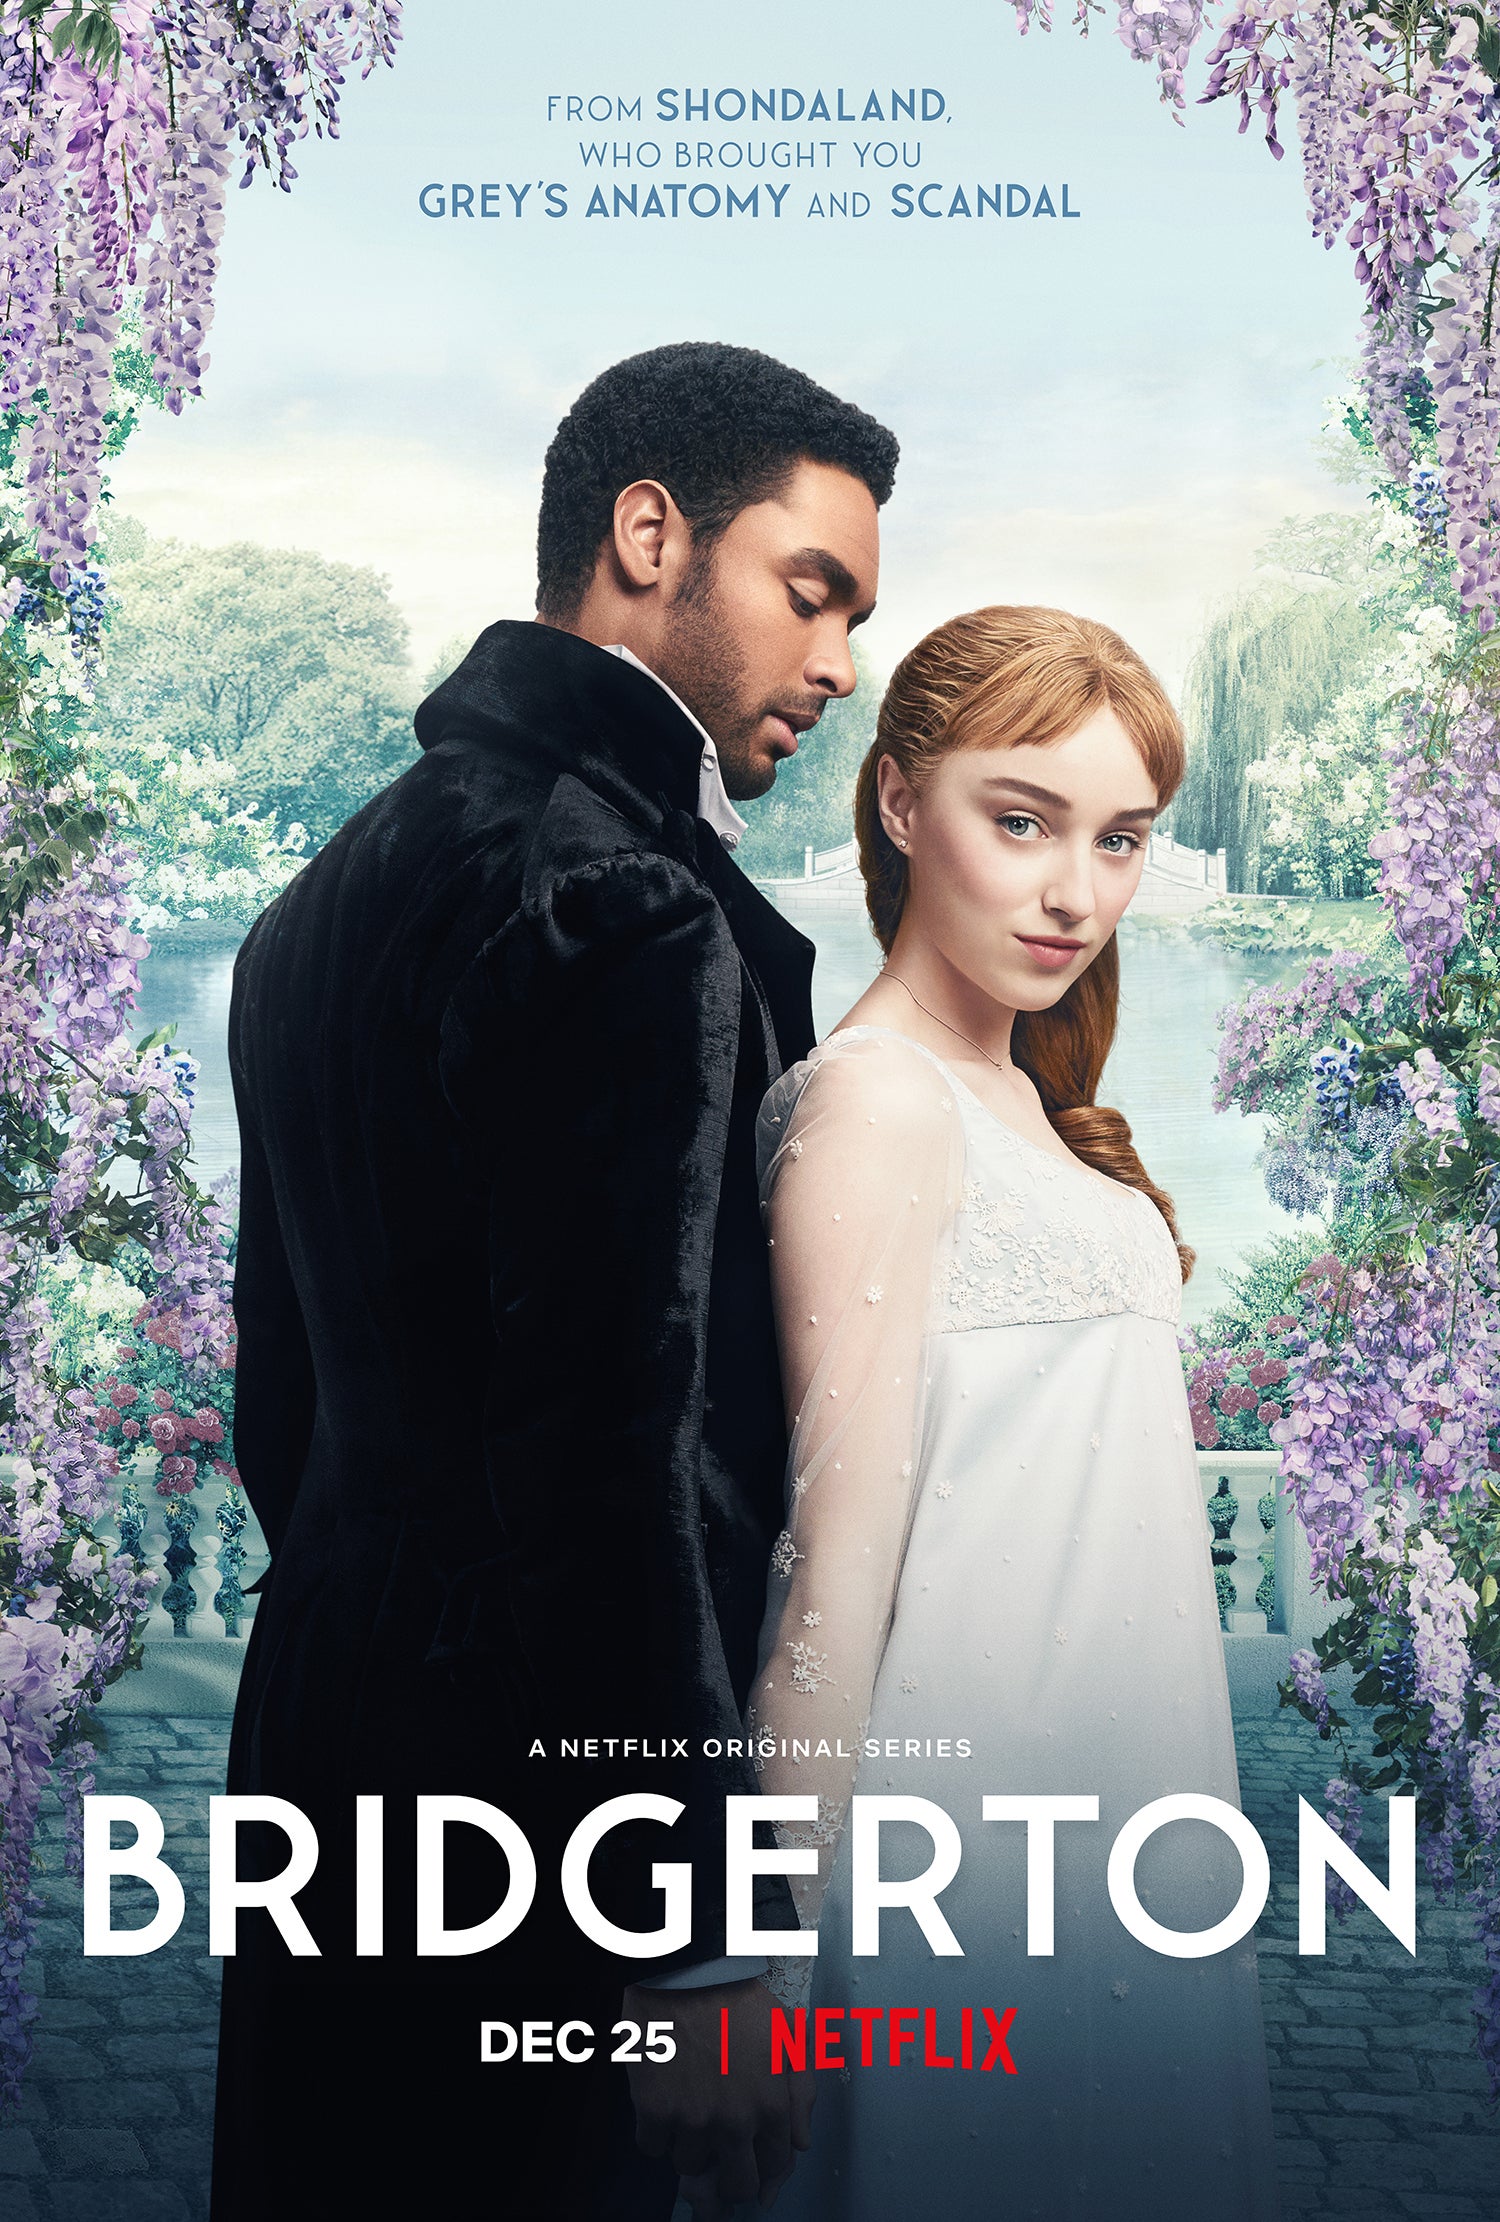 ‘Bridgerton’ Is Getting A Second Season